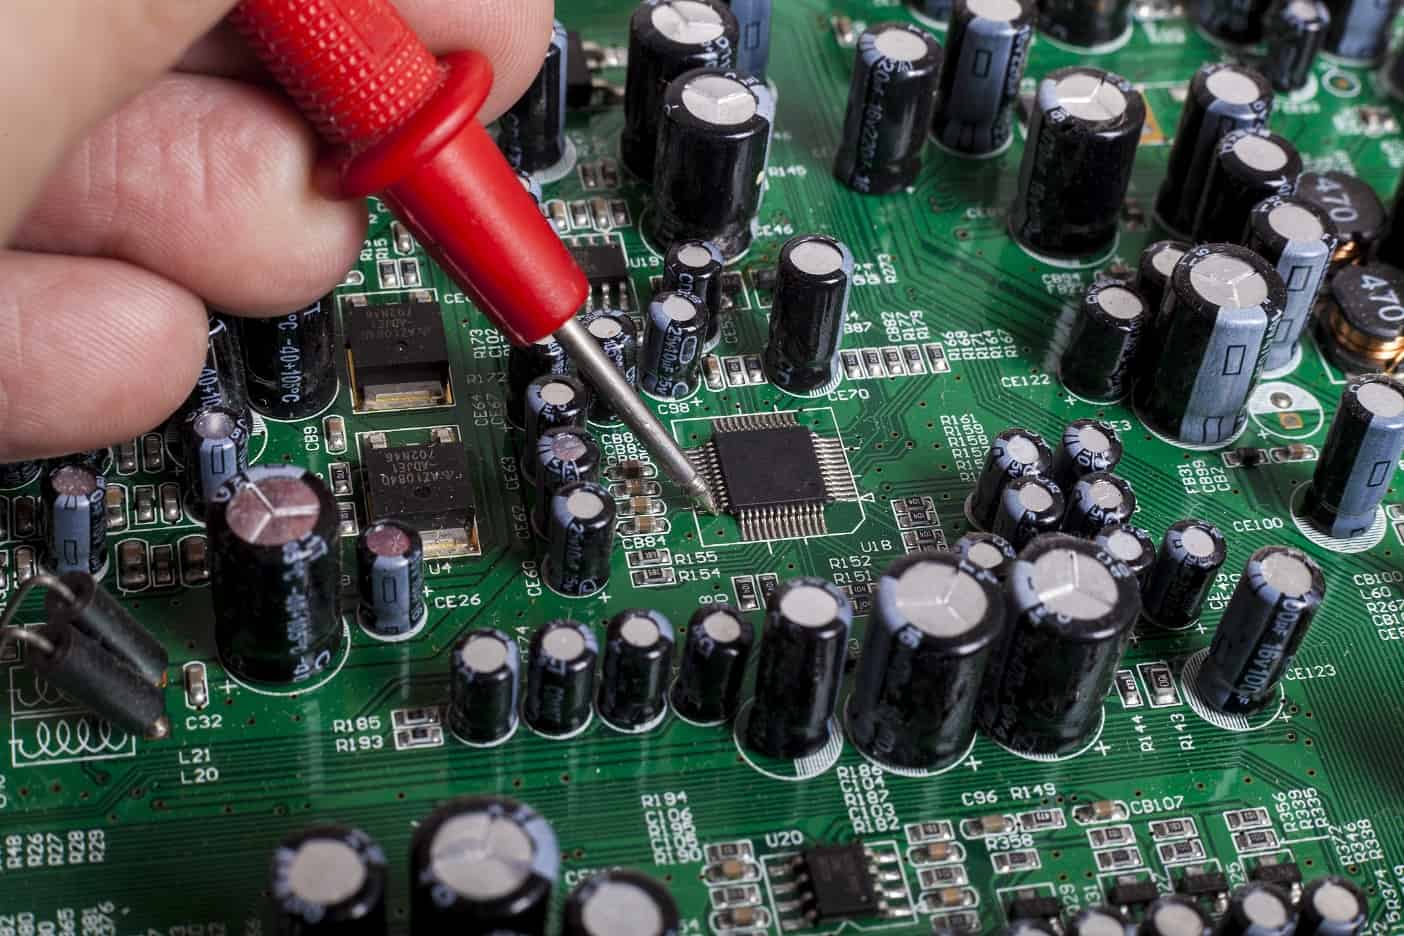 Electronics repairs